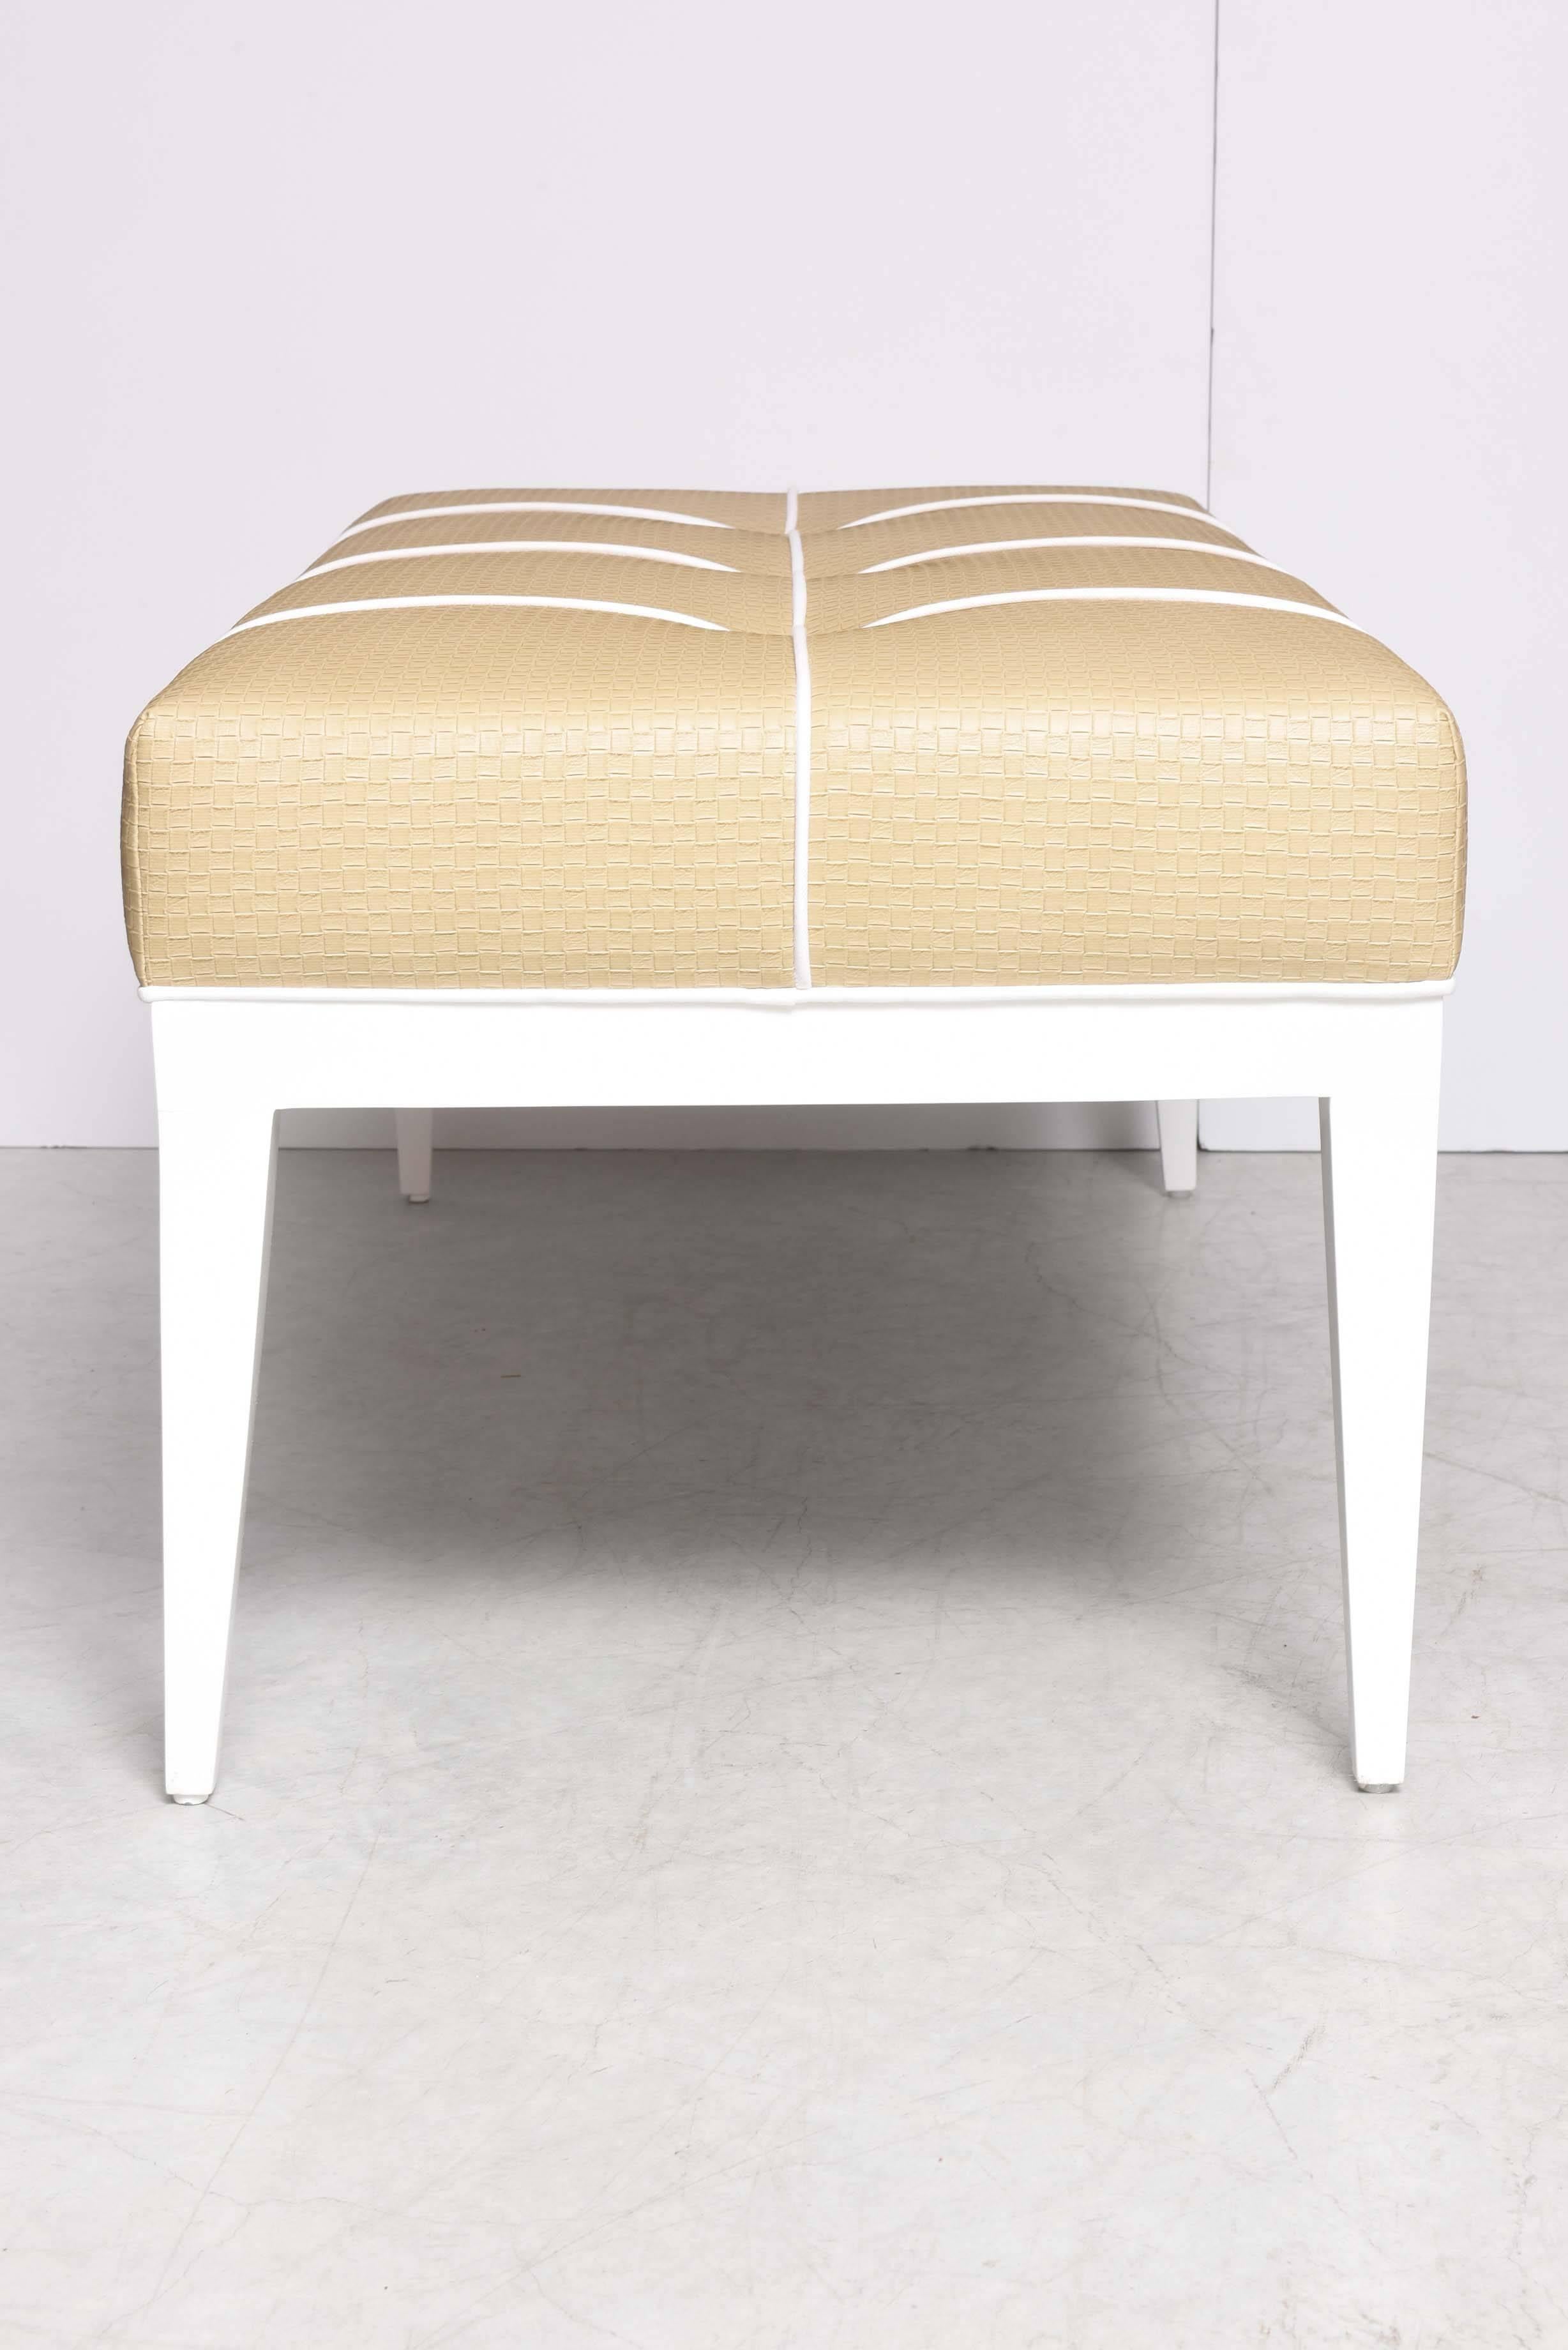 Fabric SALE! SALE! SALE! Studio-Built Bedroom Bench DESIGNED BY SUSANER beche, white 